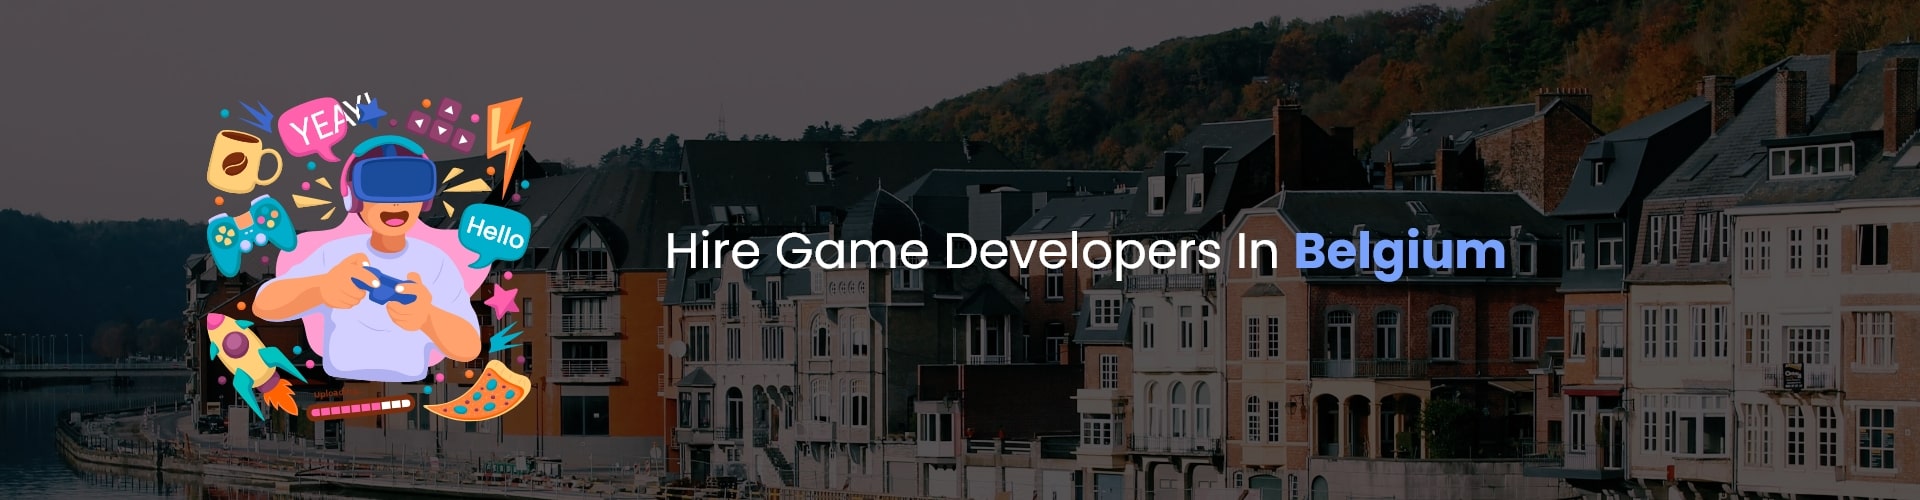 hire game developers in belgium